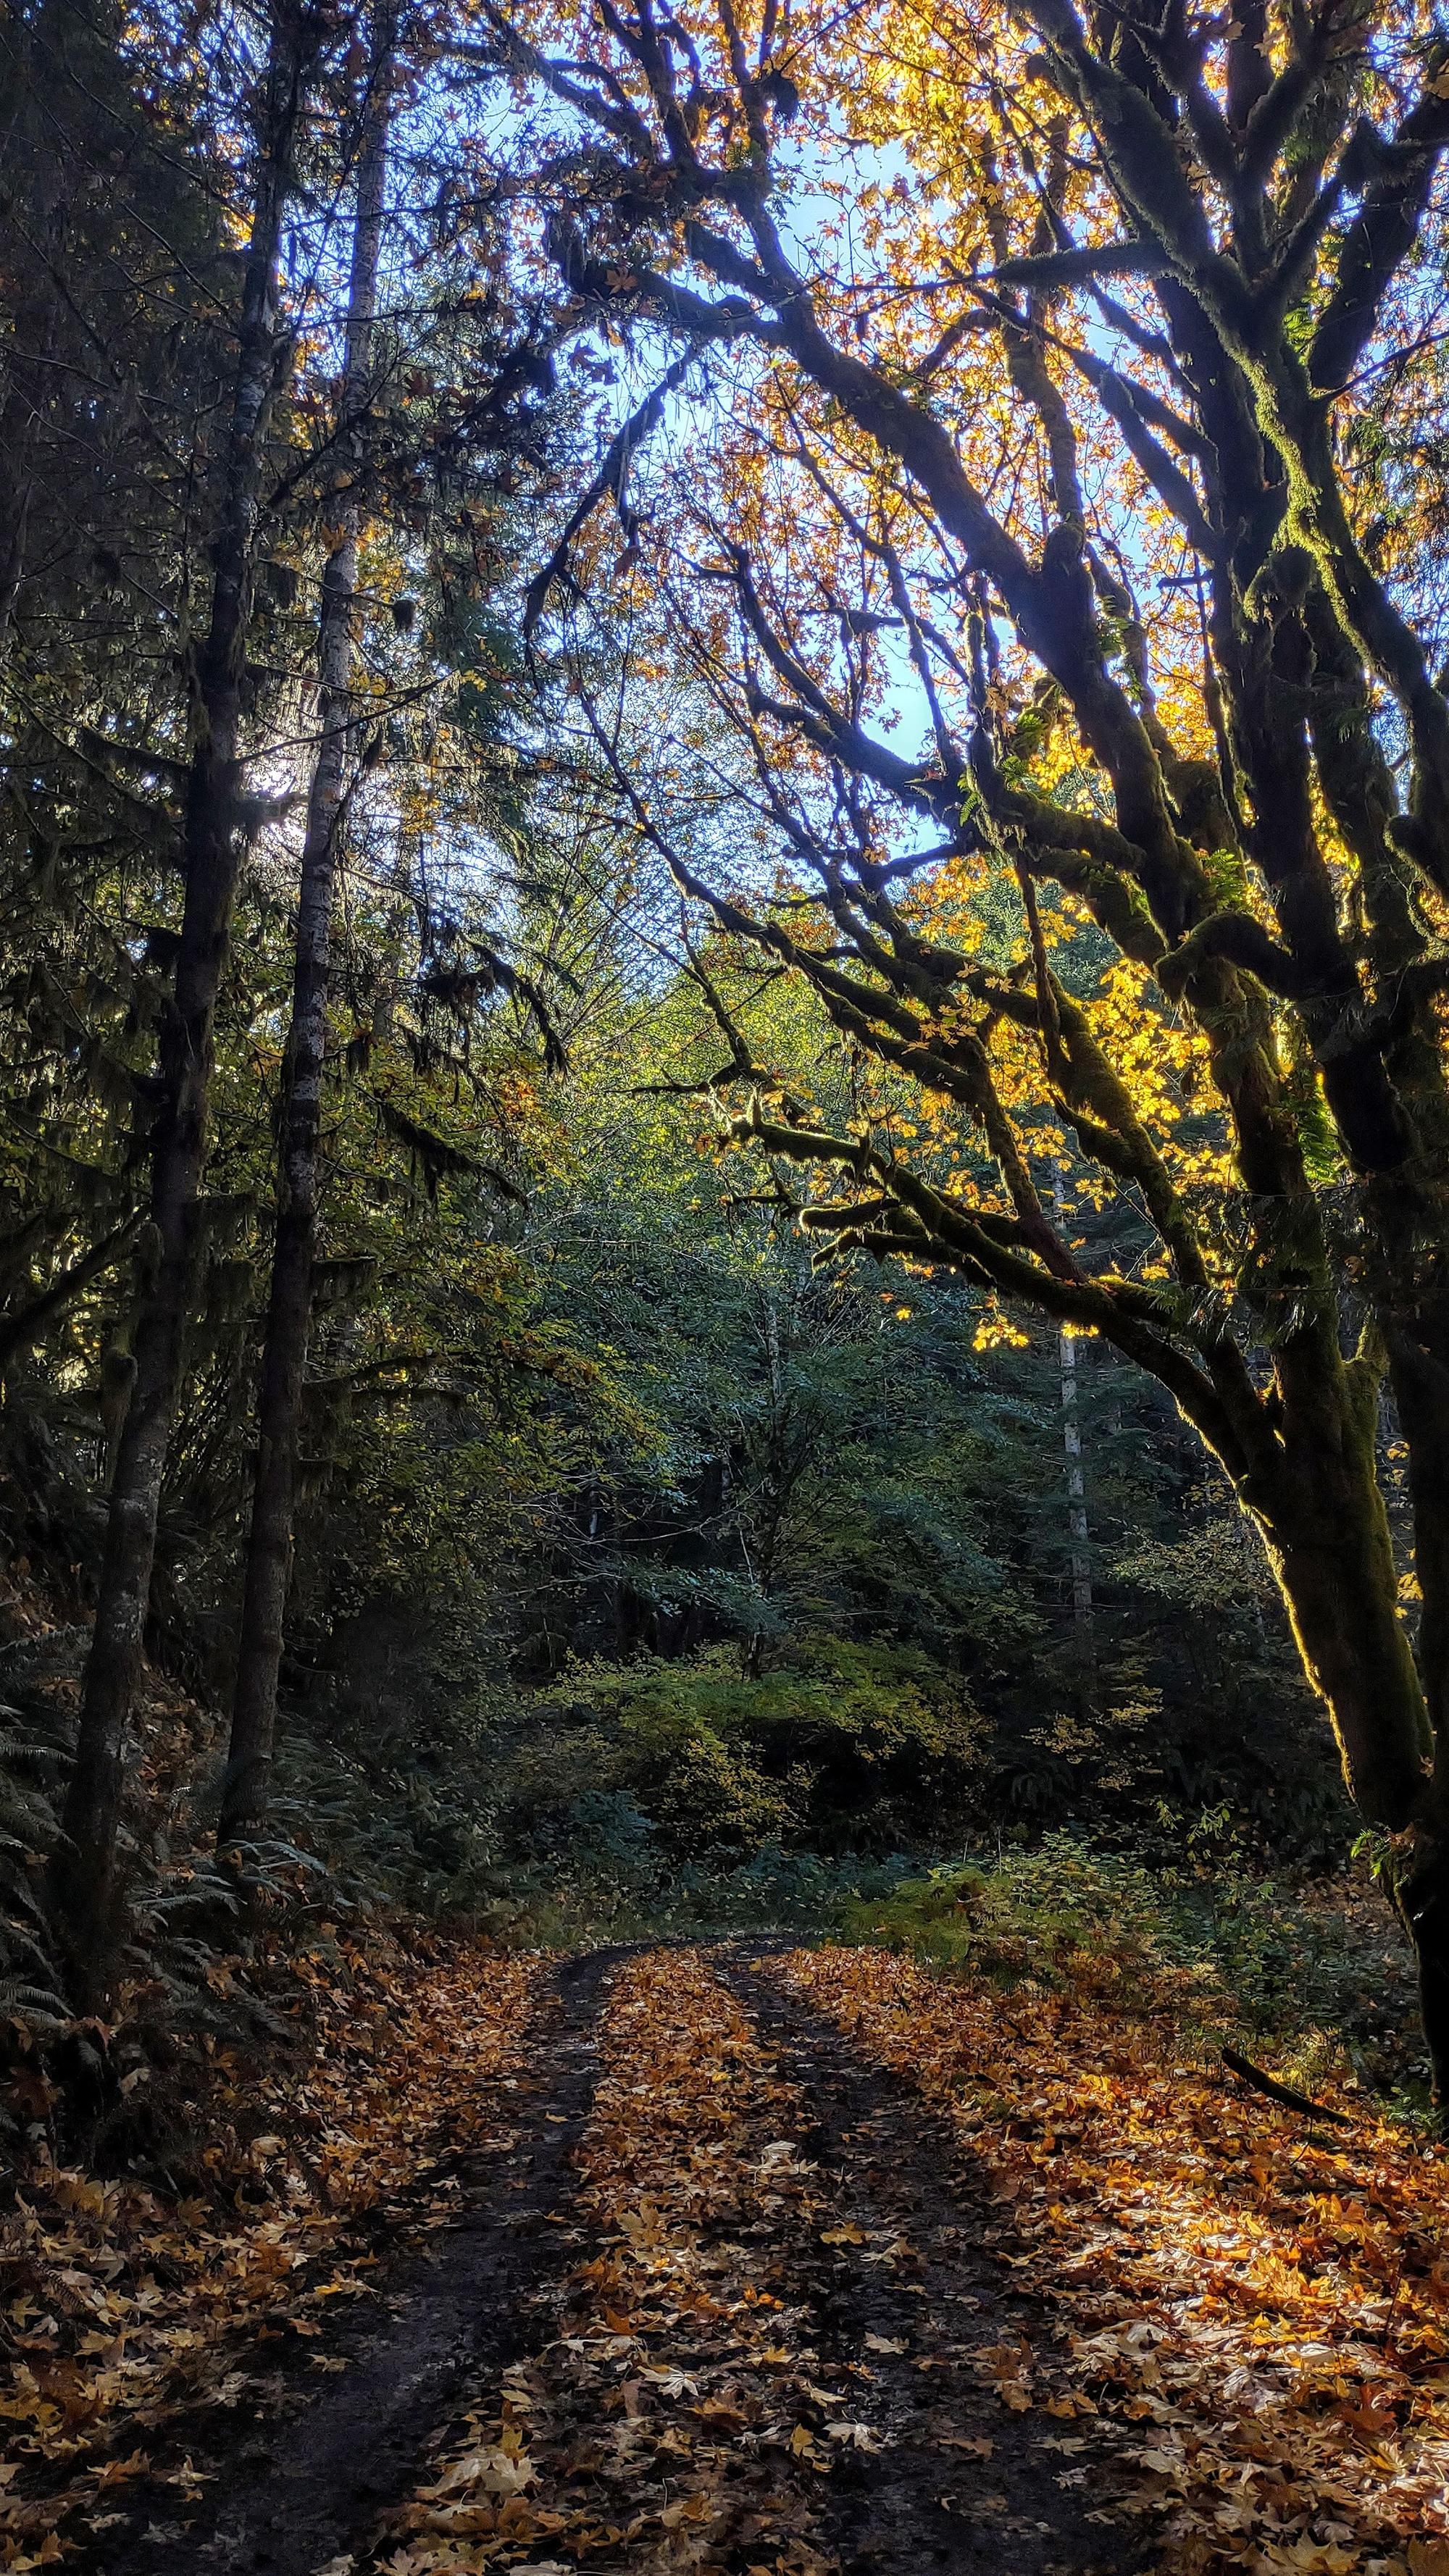 bigleaf maple canopy in fall, gold leaves along trail